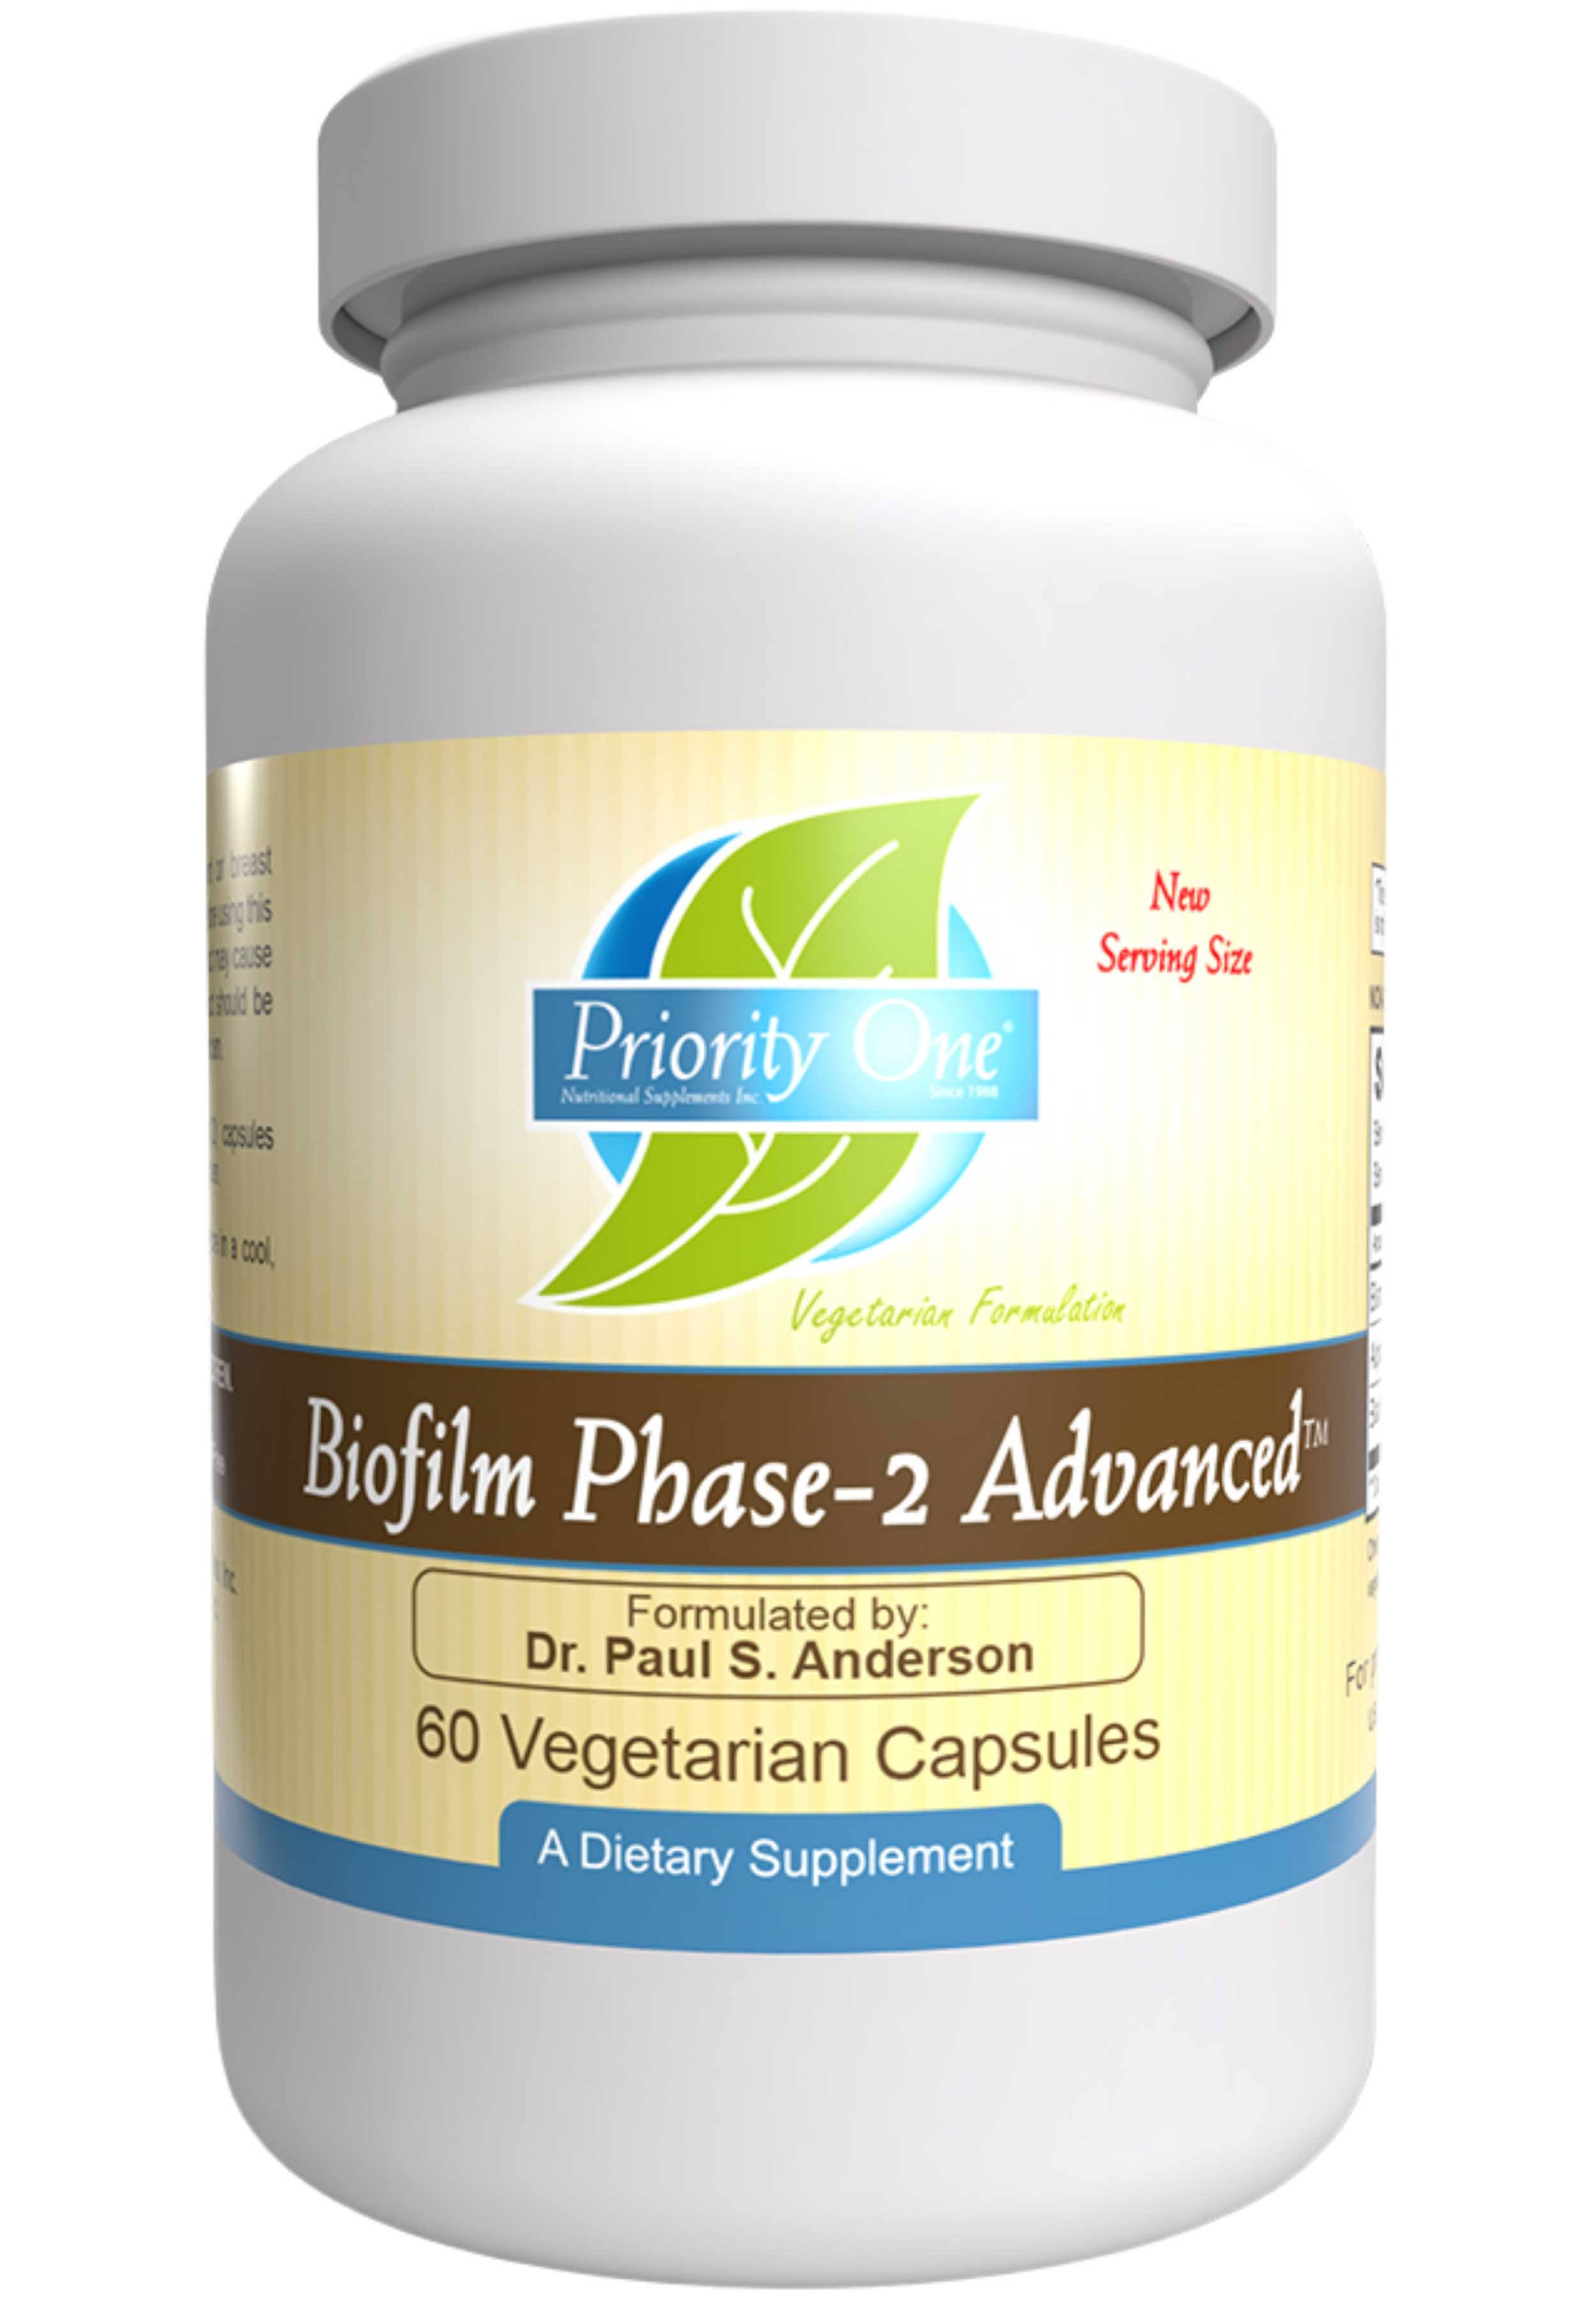 Priority One Biofilm Phase-2 Advanced - 60 Vegetarian Capsules